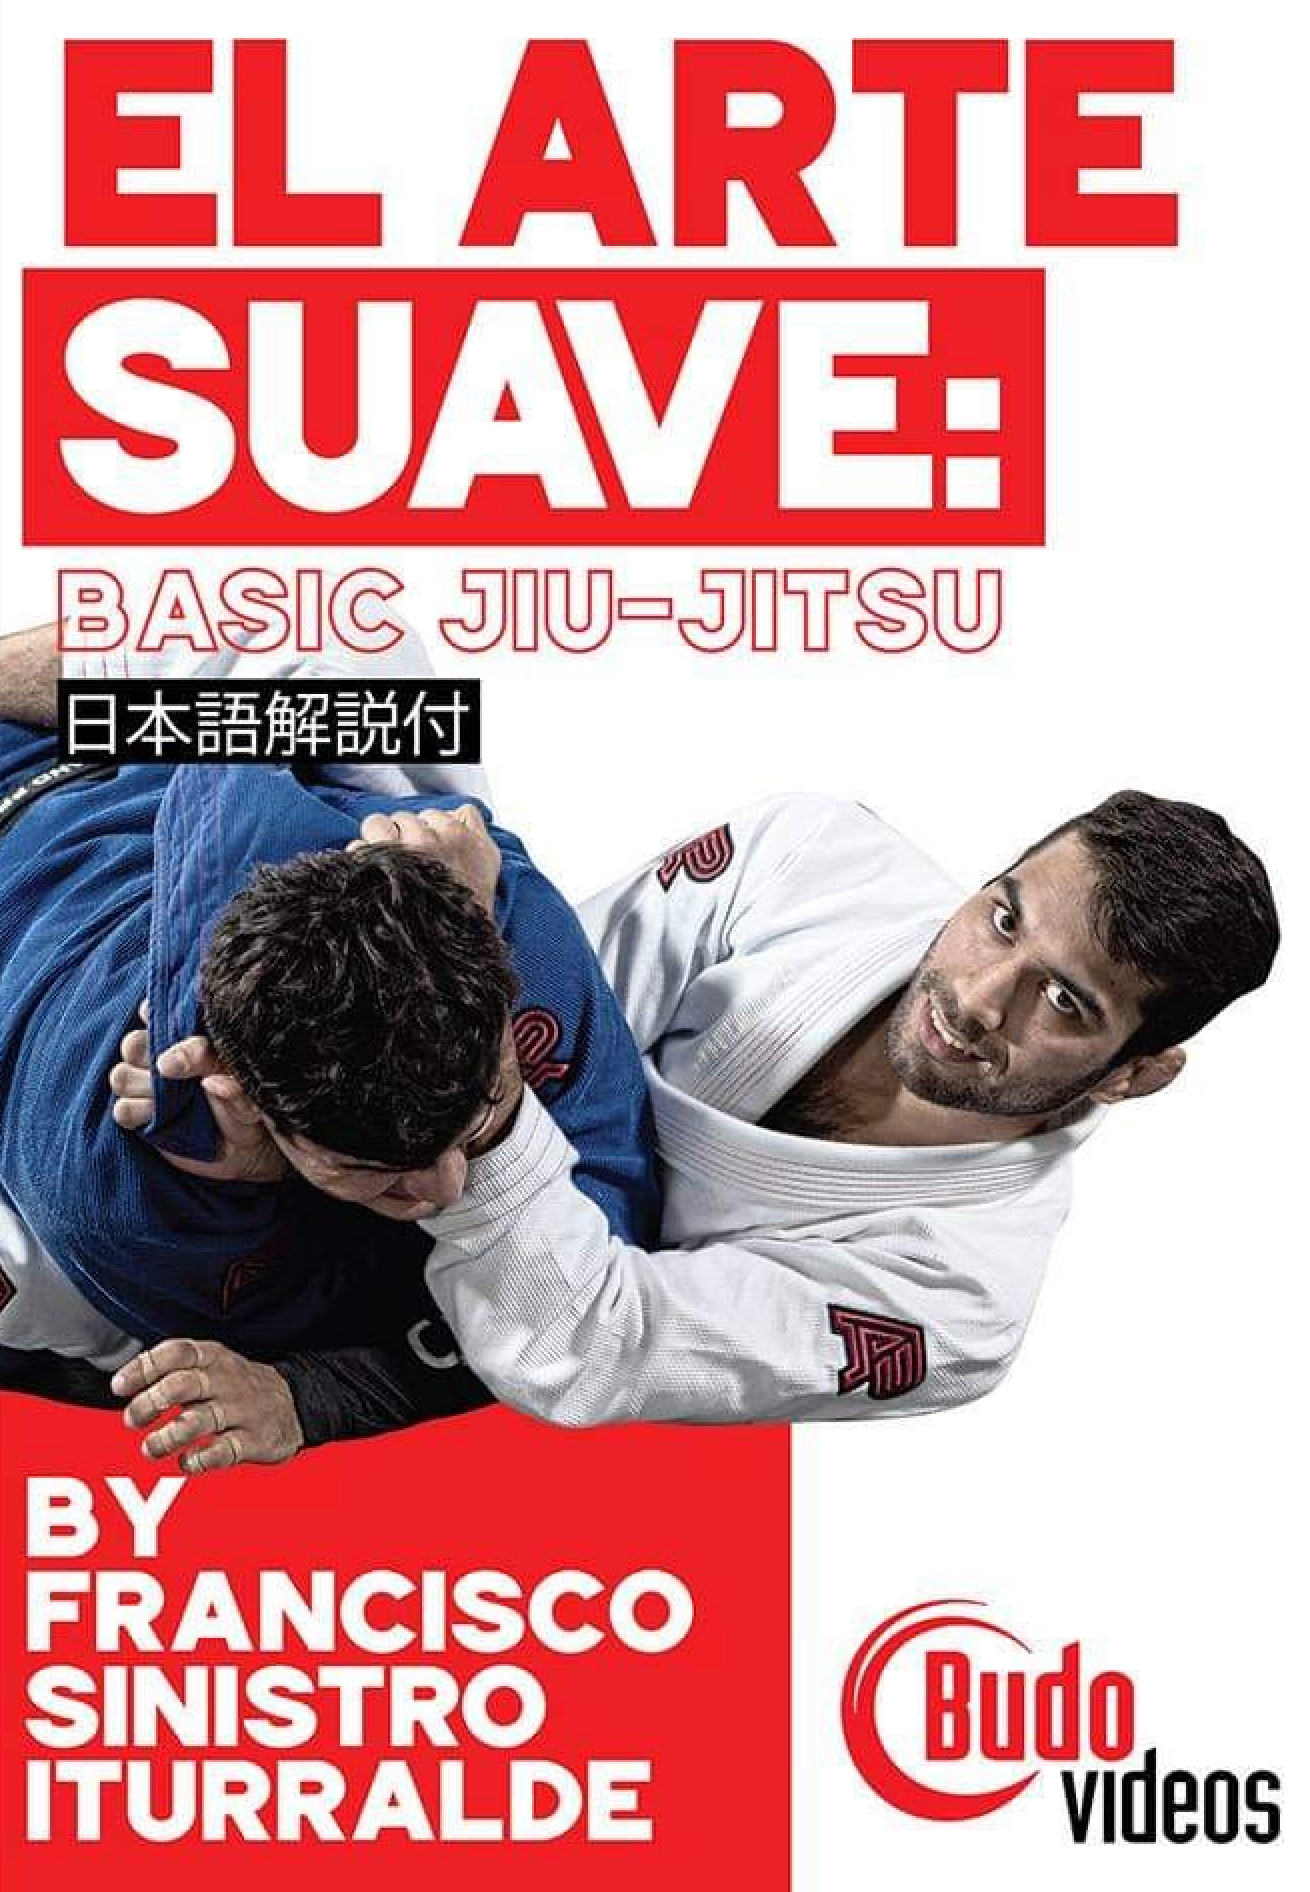 El Arte Suave: Basic Jiu-Jitsu DVD or Blu-ray by Francisco Sinistro Iturralde - Budovideos Inc